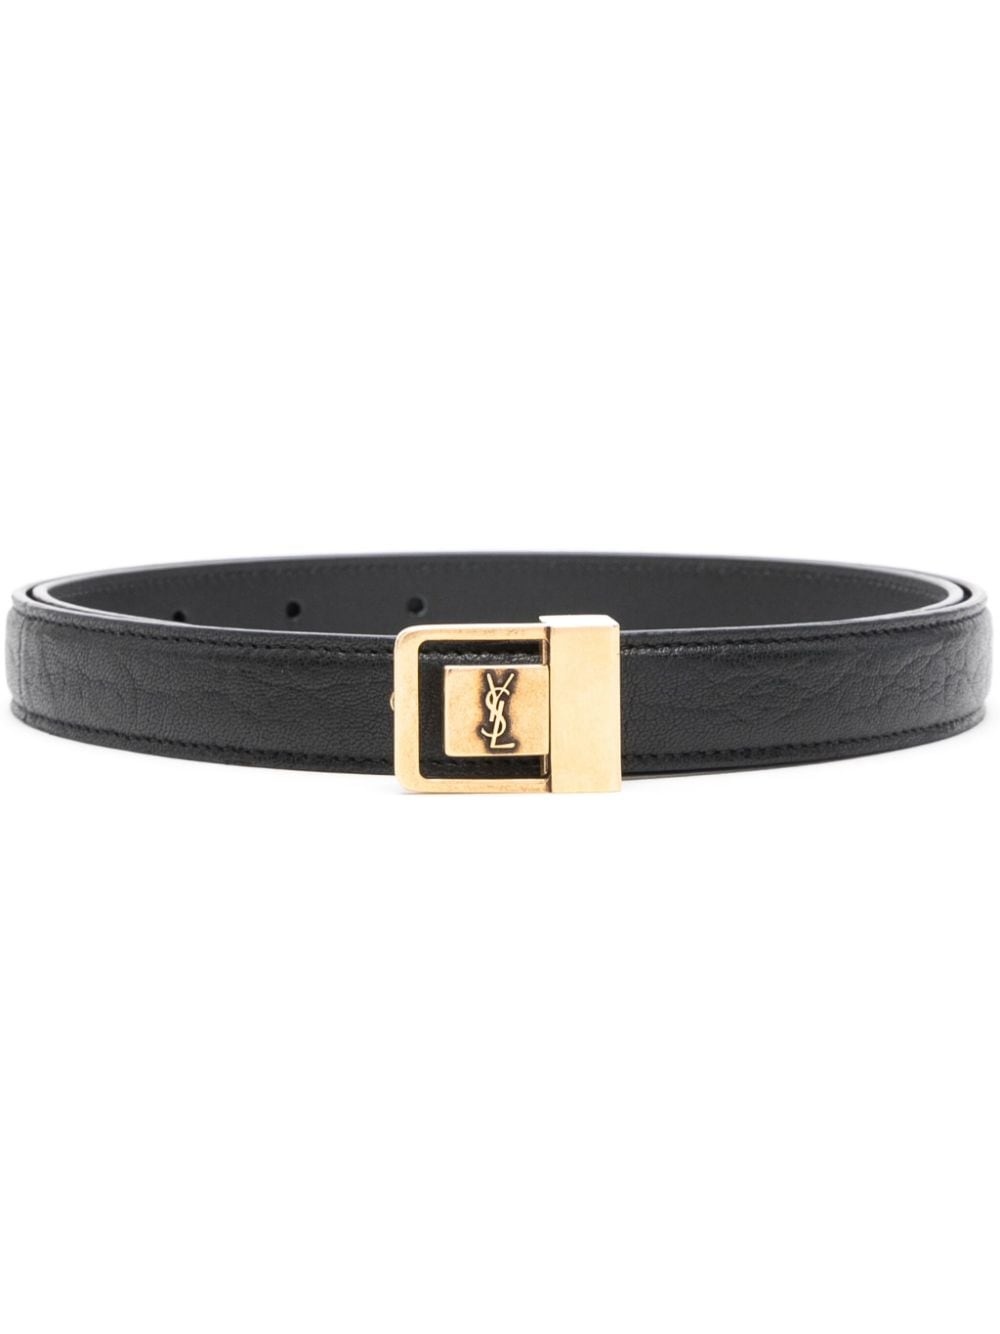 La 66 leather belt - 1